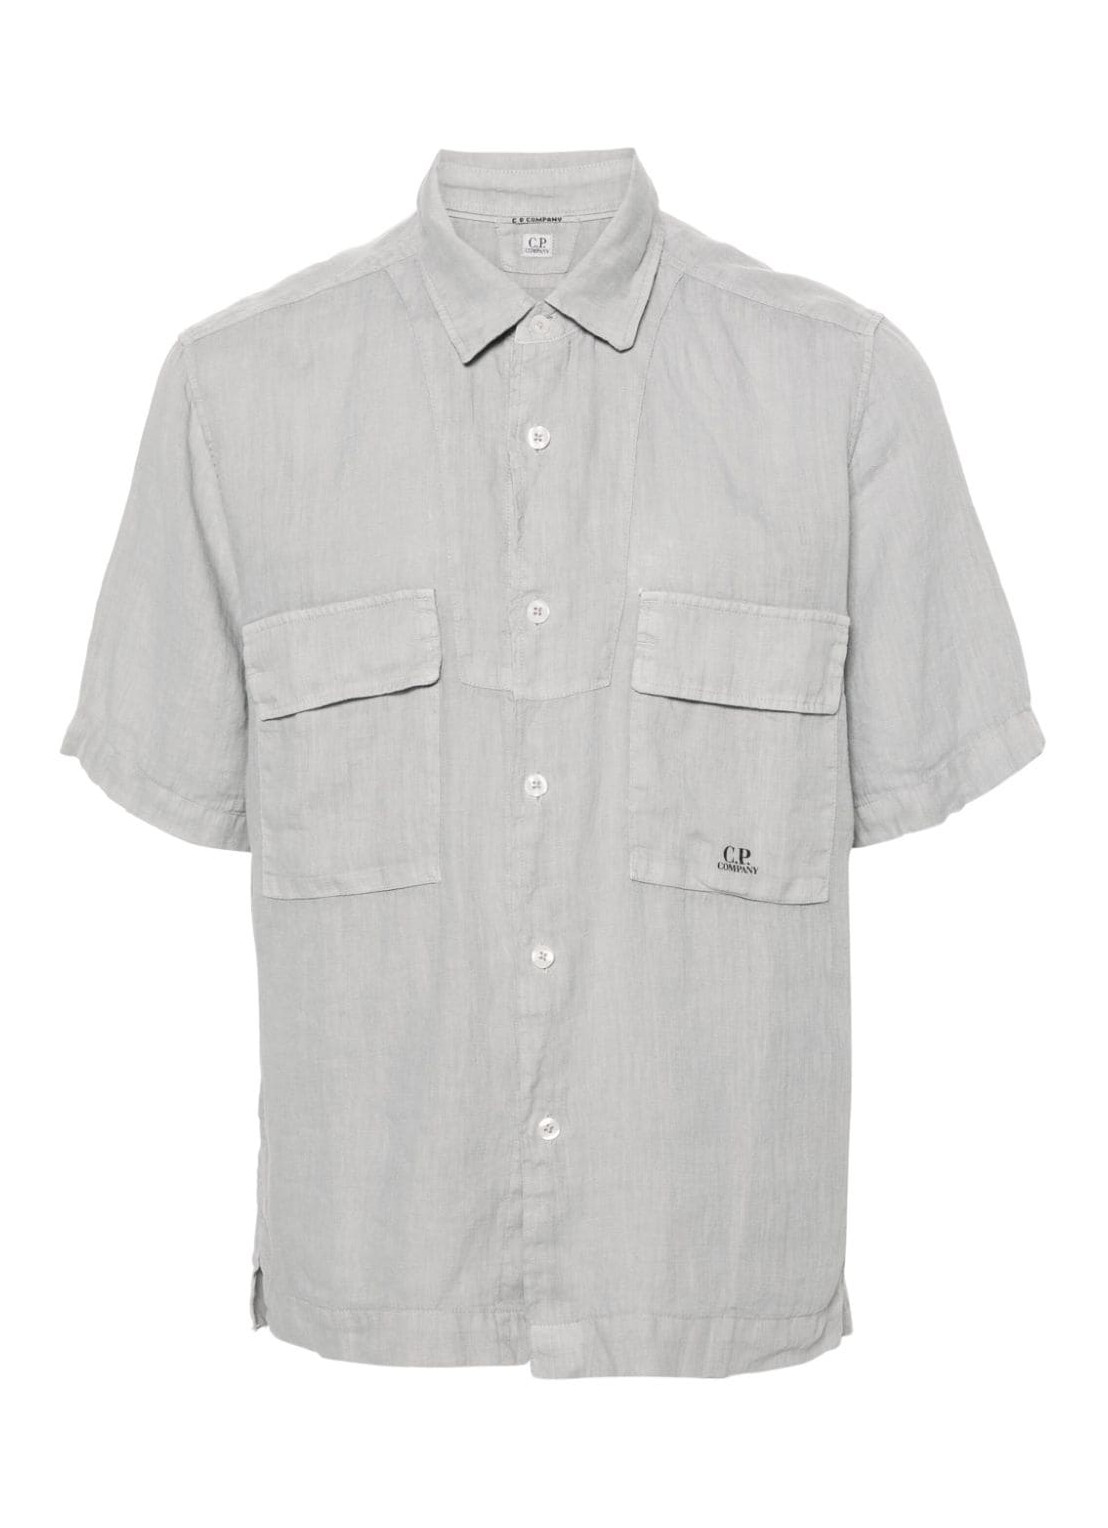 Camiseria c.p.company shirt manlinen short sleeved shirt - 16cmsh210a005415g 913 talla M
 